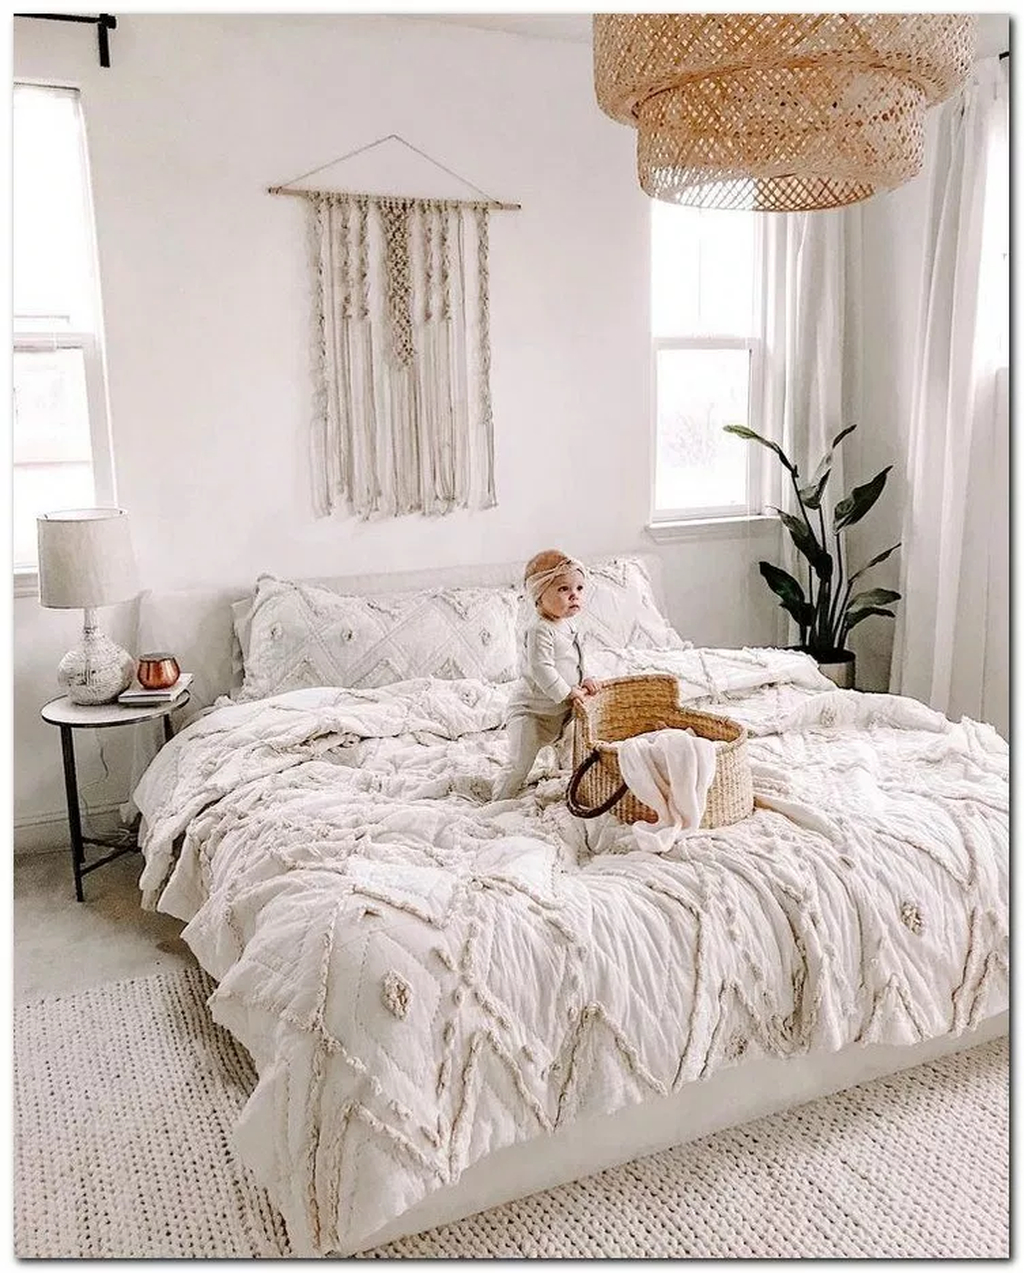 44 Cozy Bedroom Design Ideas To Make Your Sleep More Comfortable ...